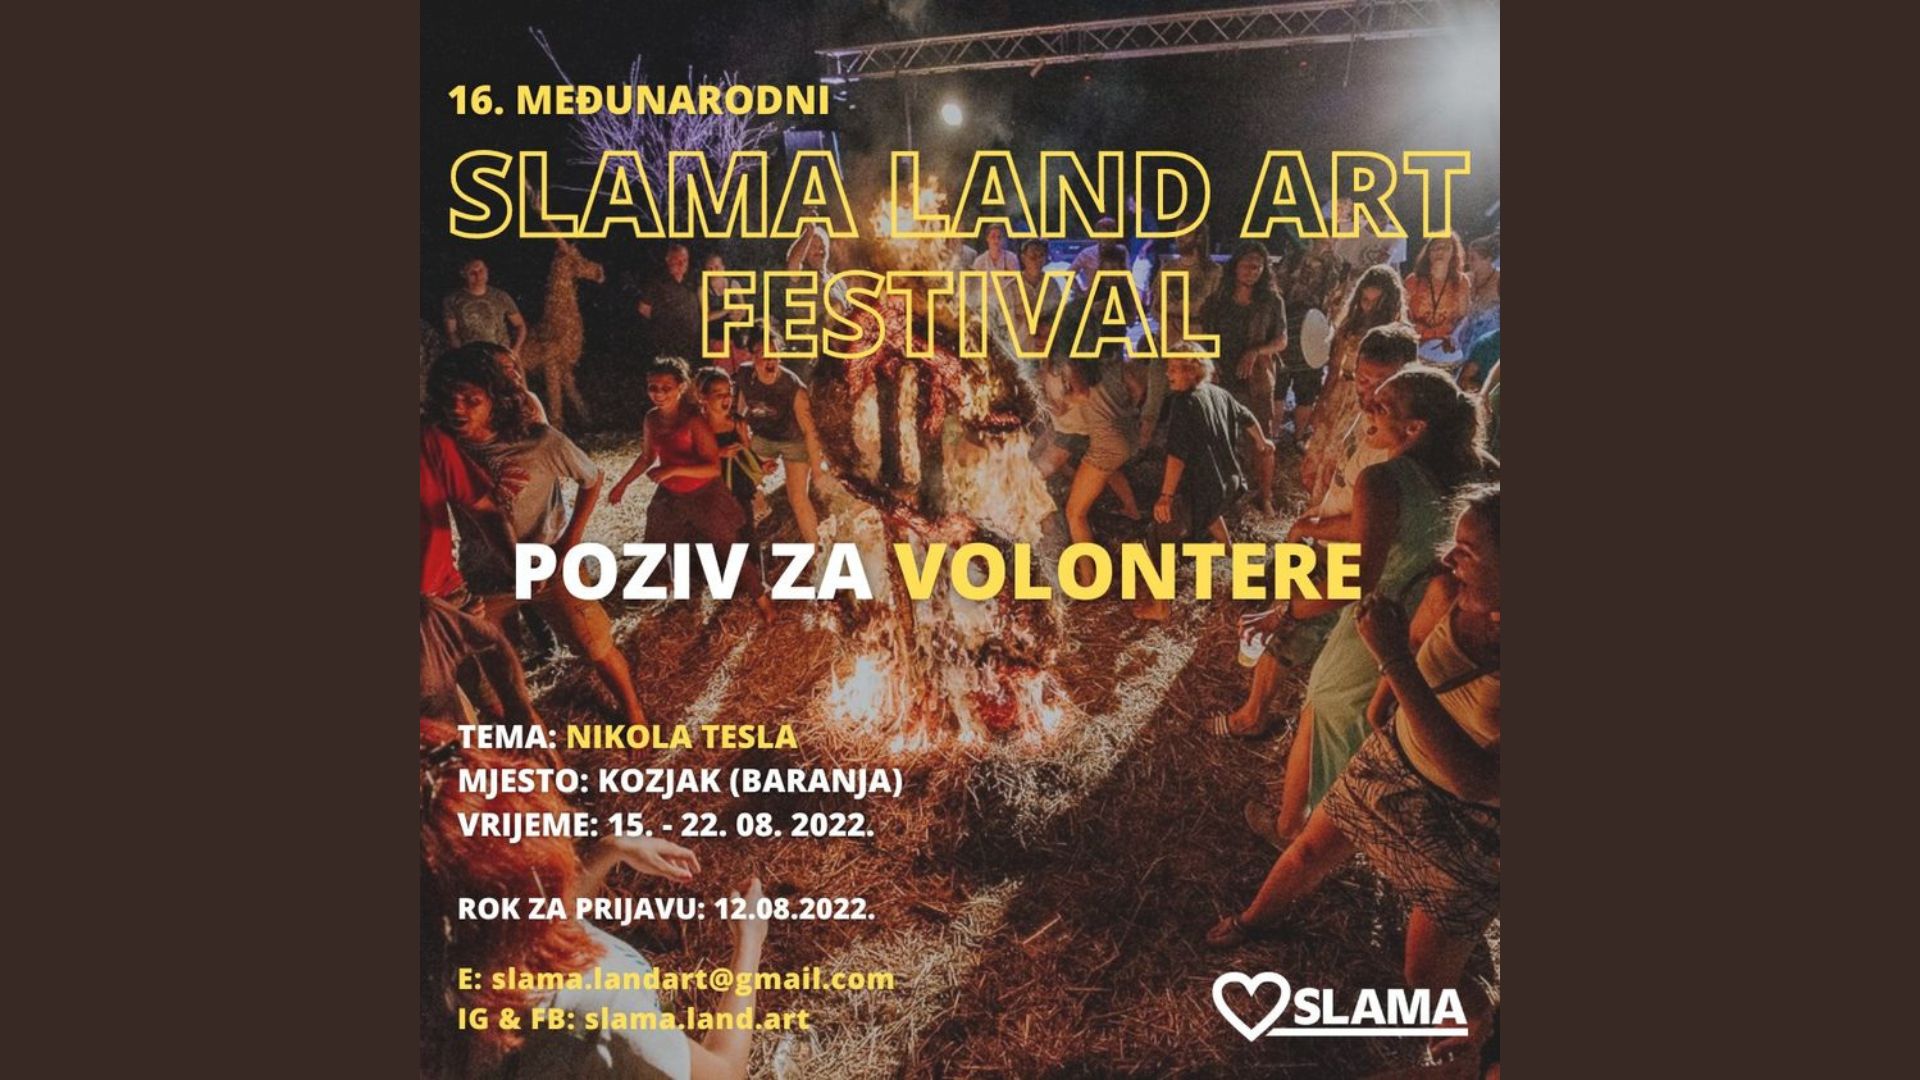 Slama Land Art - Poziv za volontere